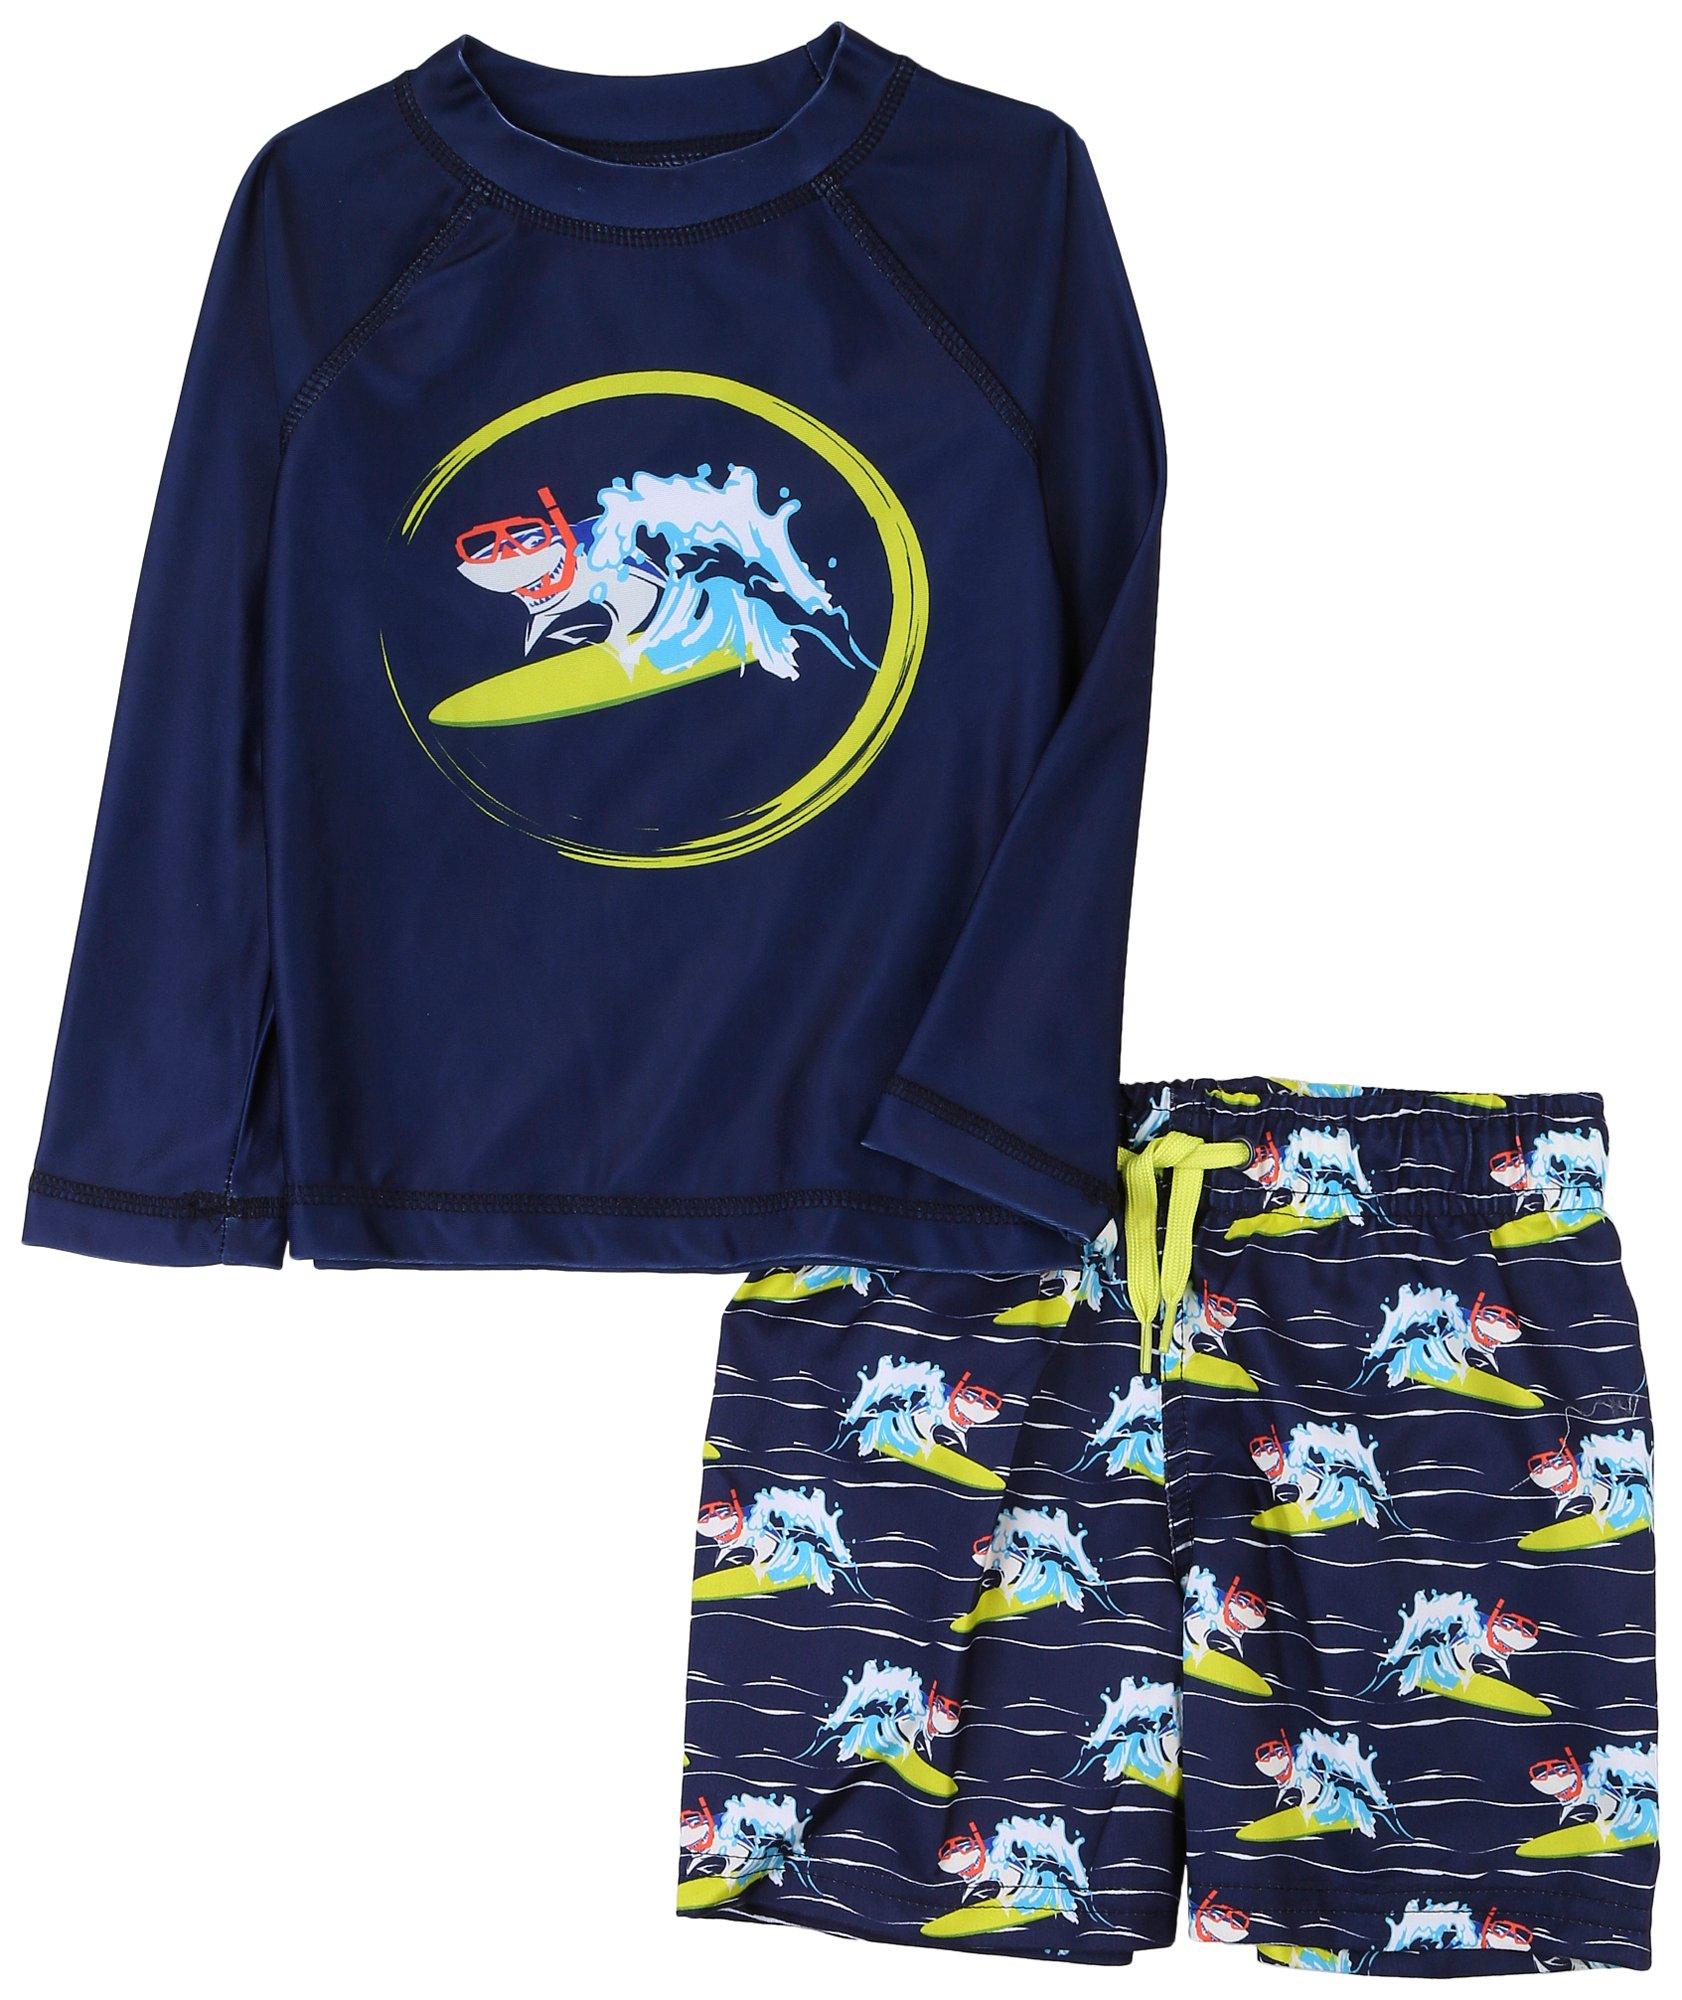 DOT & ZAZZ Toddler Boys 2-pc. Surf Shark Swimsuit Set